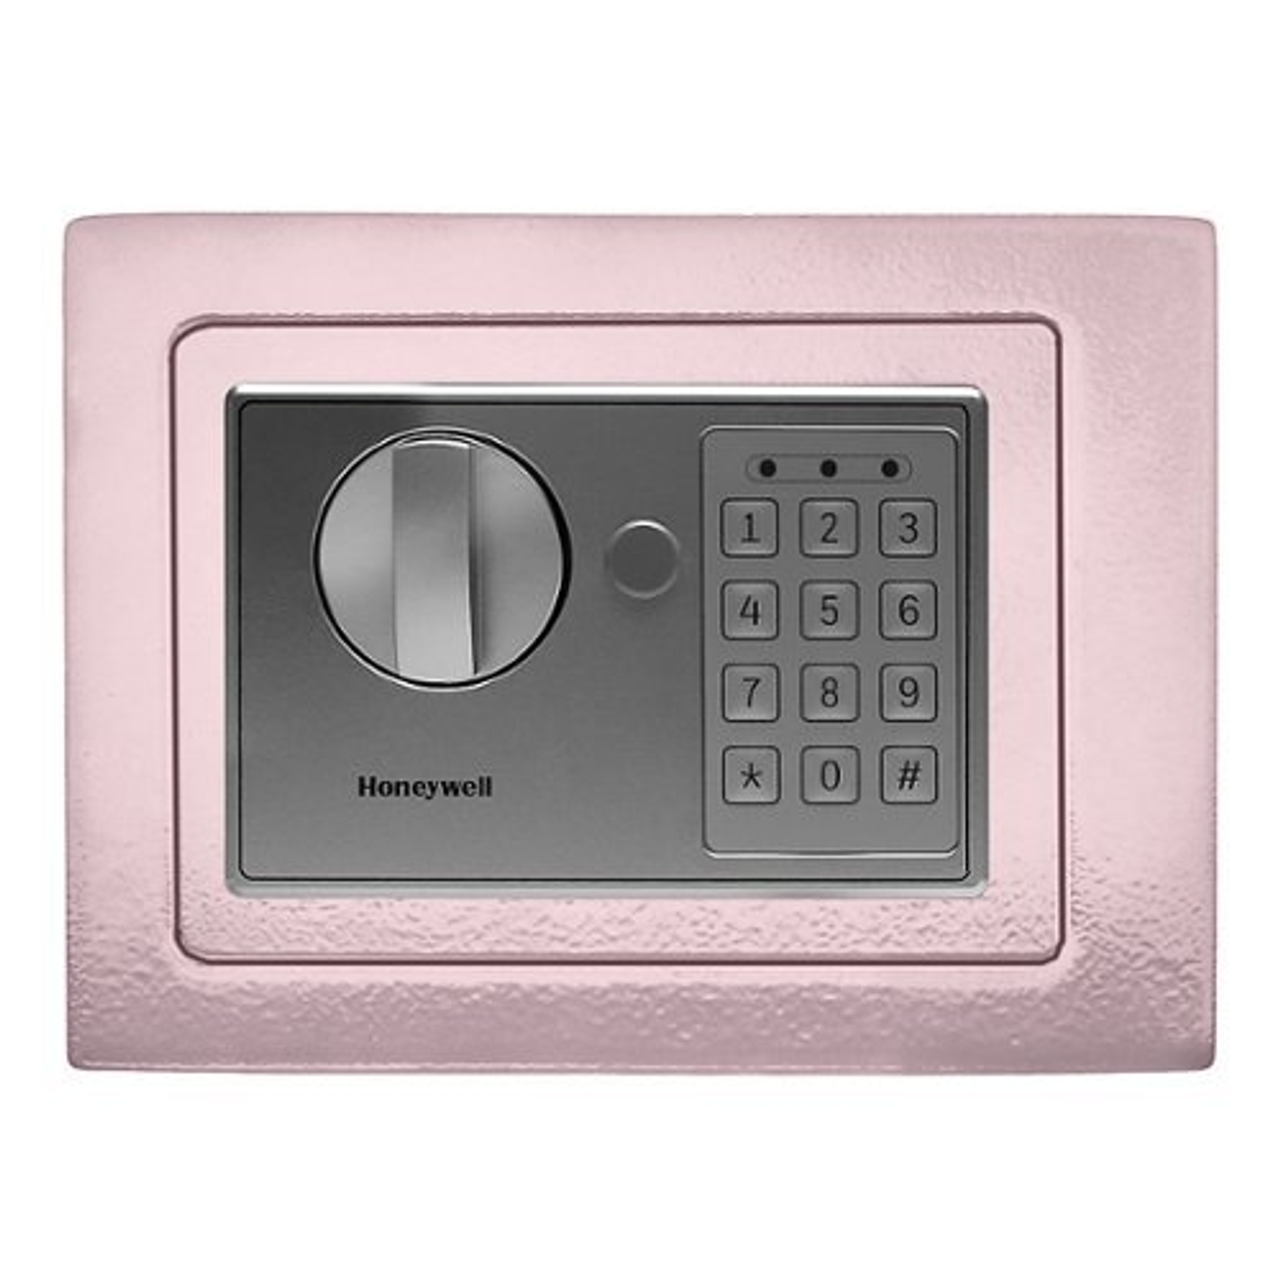 Honeywell Compact Digital Security Box .17 CU Pink - Pink